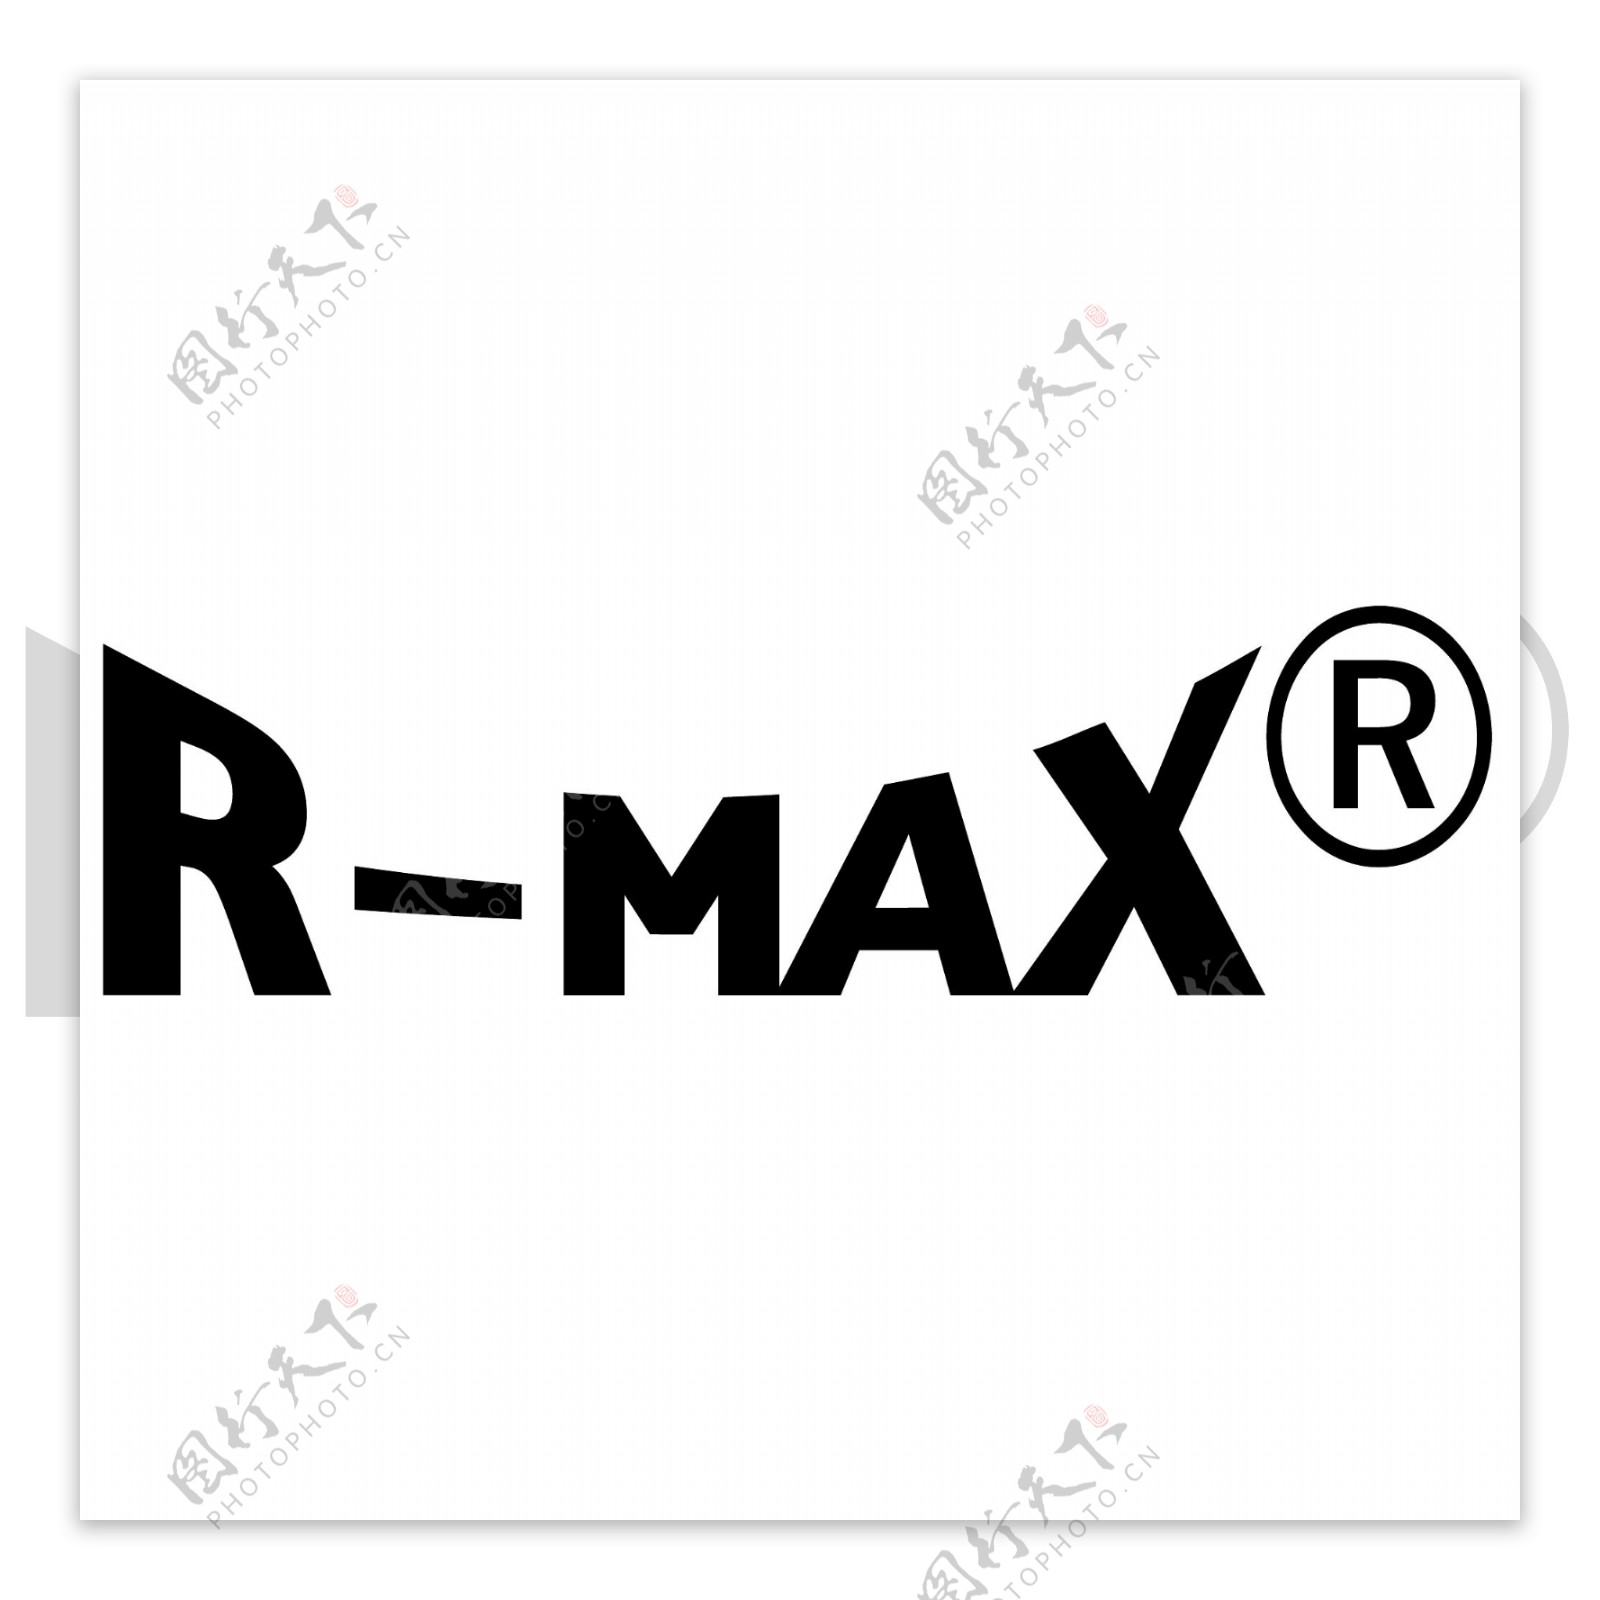 rmax